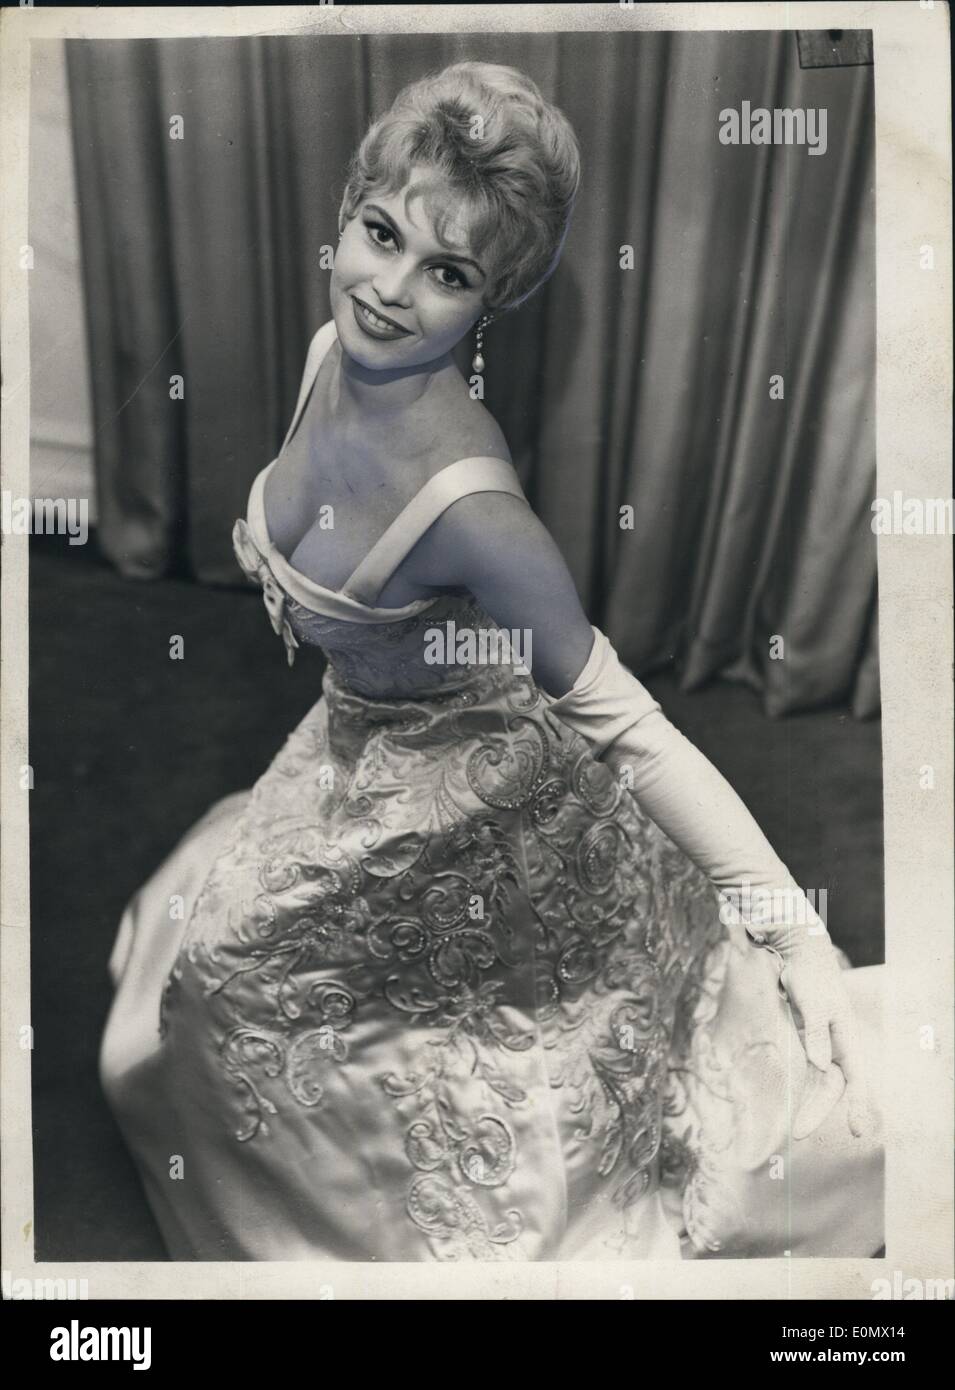 Bardot dress hi-res stock photography and images - Alamy